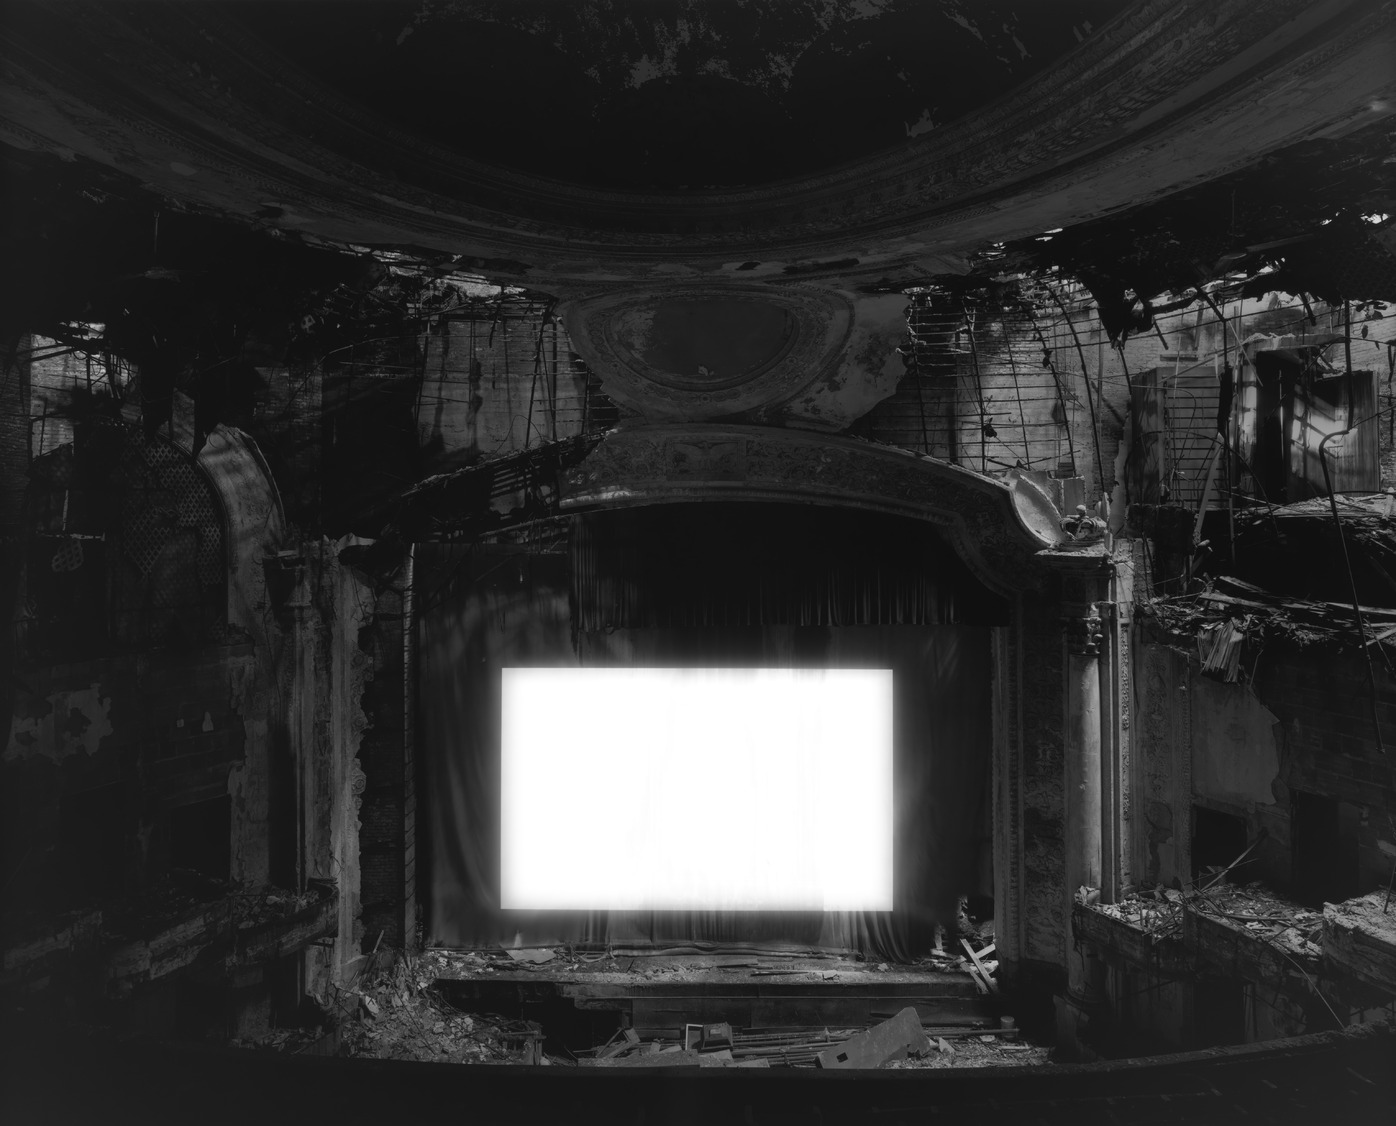 Hiroshi Sugimoto (Franklin Park Theater, Boston) [Rashomon, 1950, directed by Akira Kurosawa] 2015 Gelatin silver print ©Hiroshi Sugimoto/Courtesy of Gallery Koyanagi